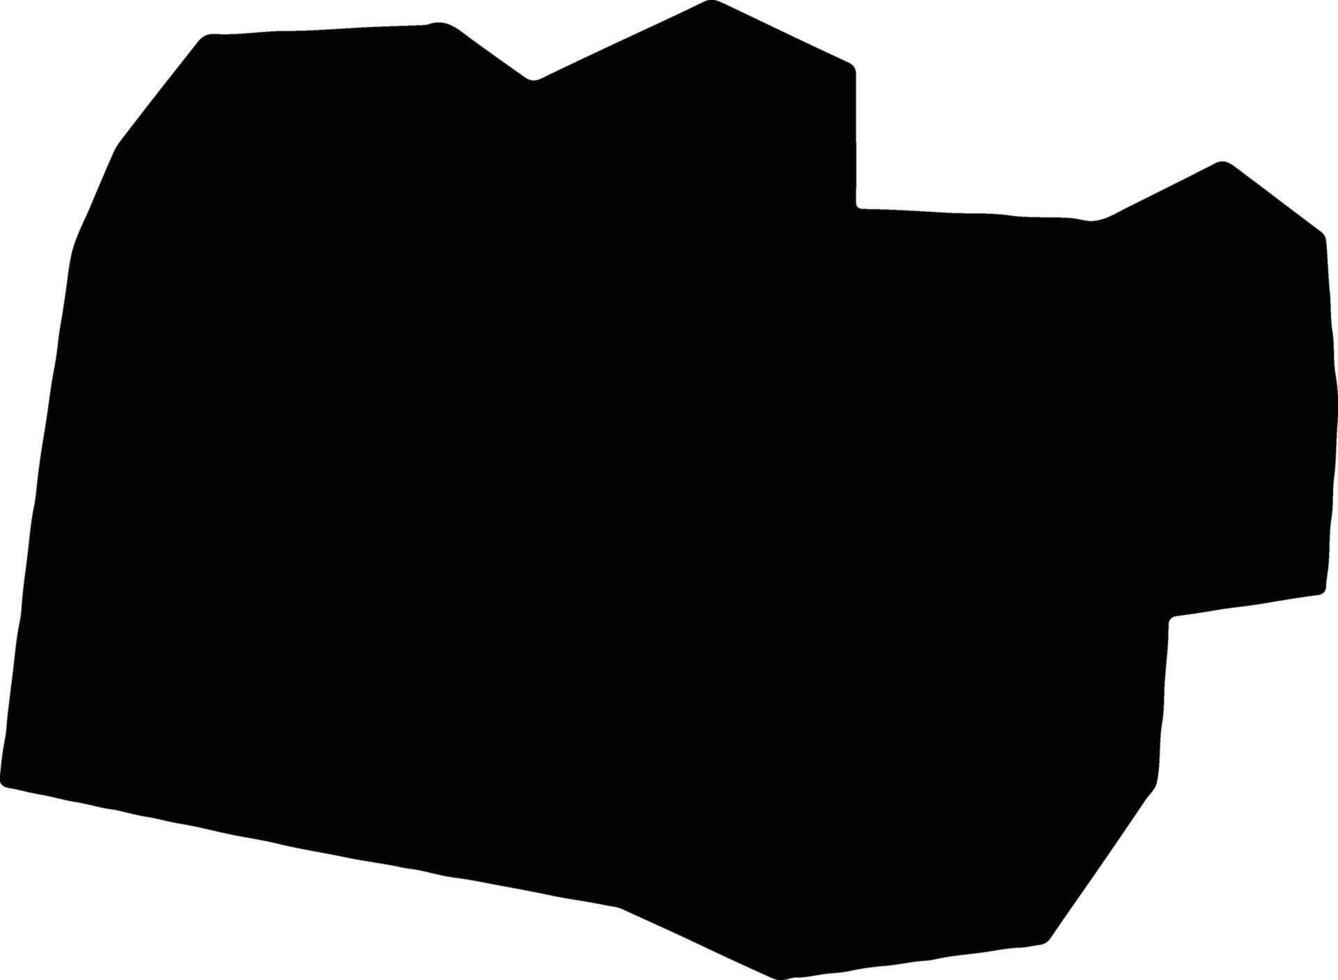 nyiregyhaza Ungheria silhouette carta geografica vettore